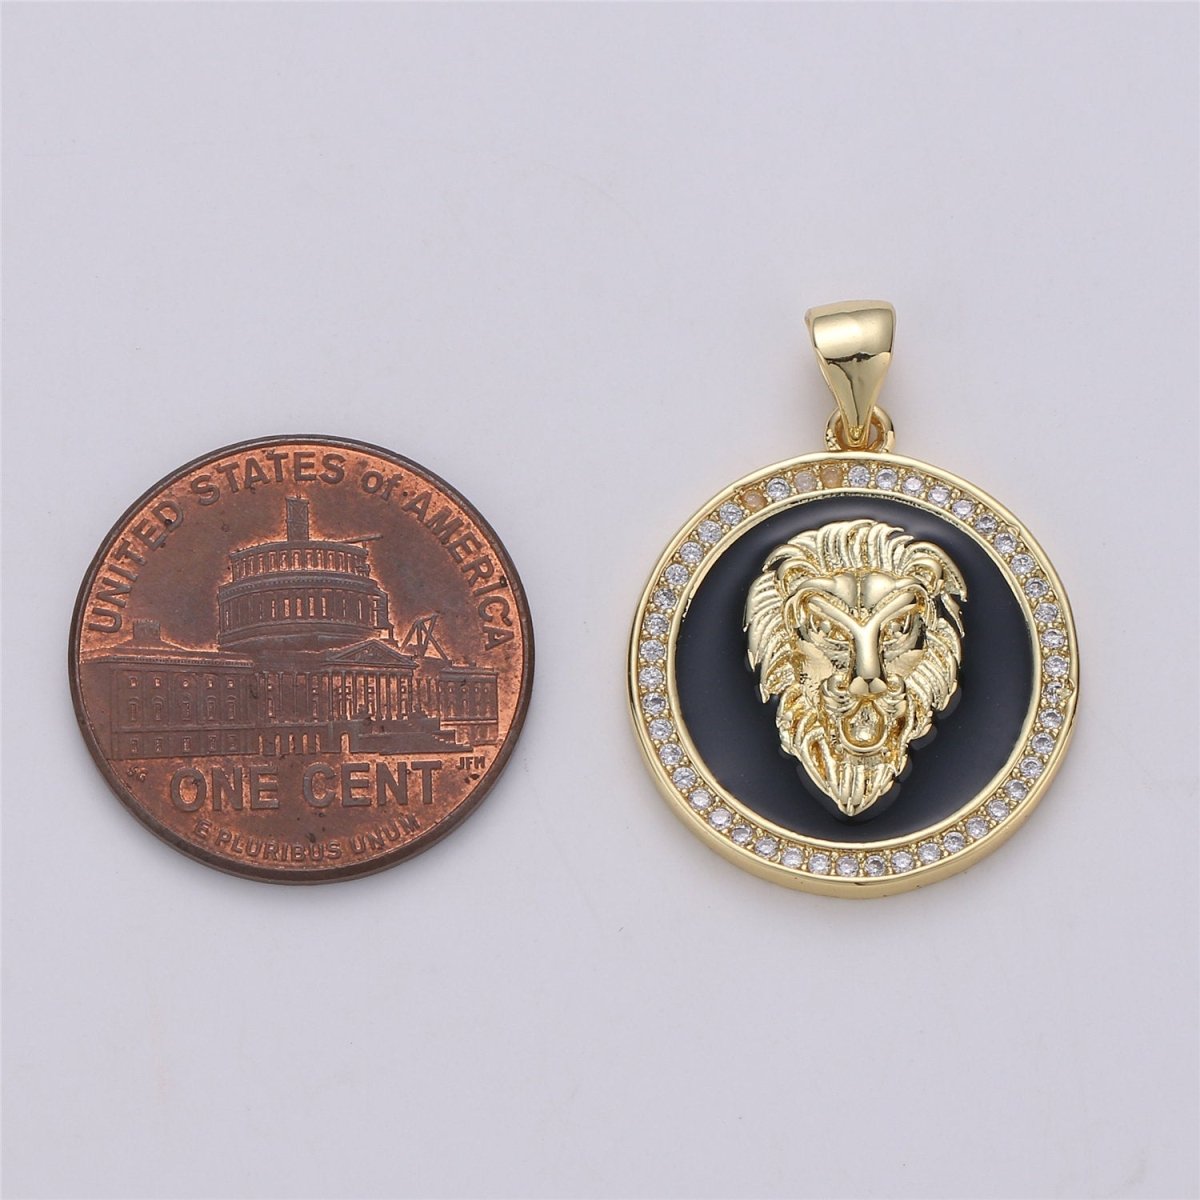 3D Micro Pave Charm Gold Filled Medallion, Lion Medallion, Lion Pendant, Lion Jewelry, Lion Necklace Charm for Statement Necklace Component I-583 - DLUXCA